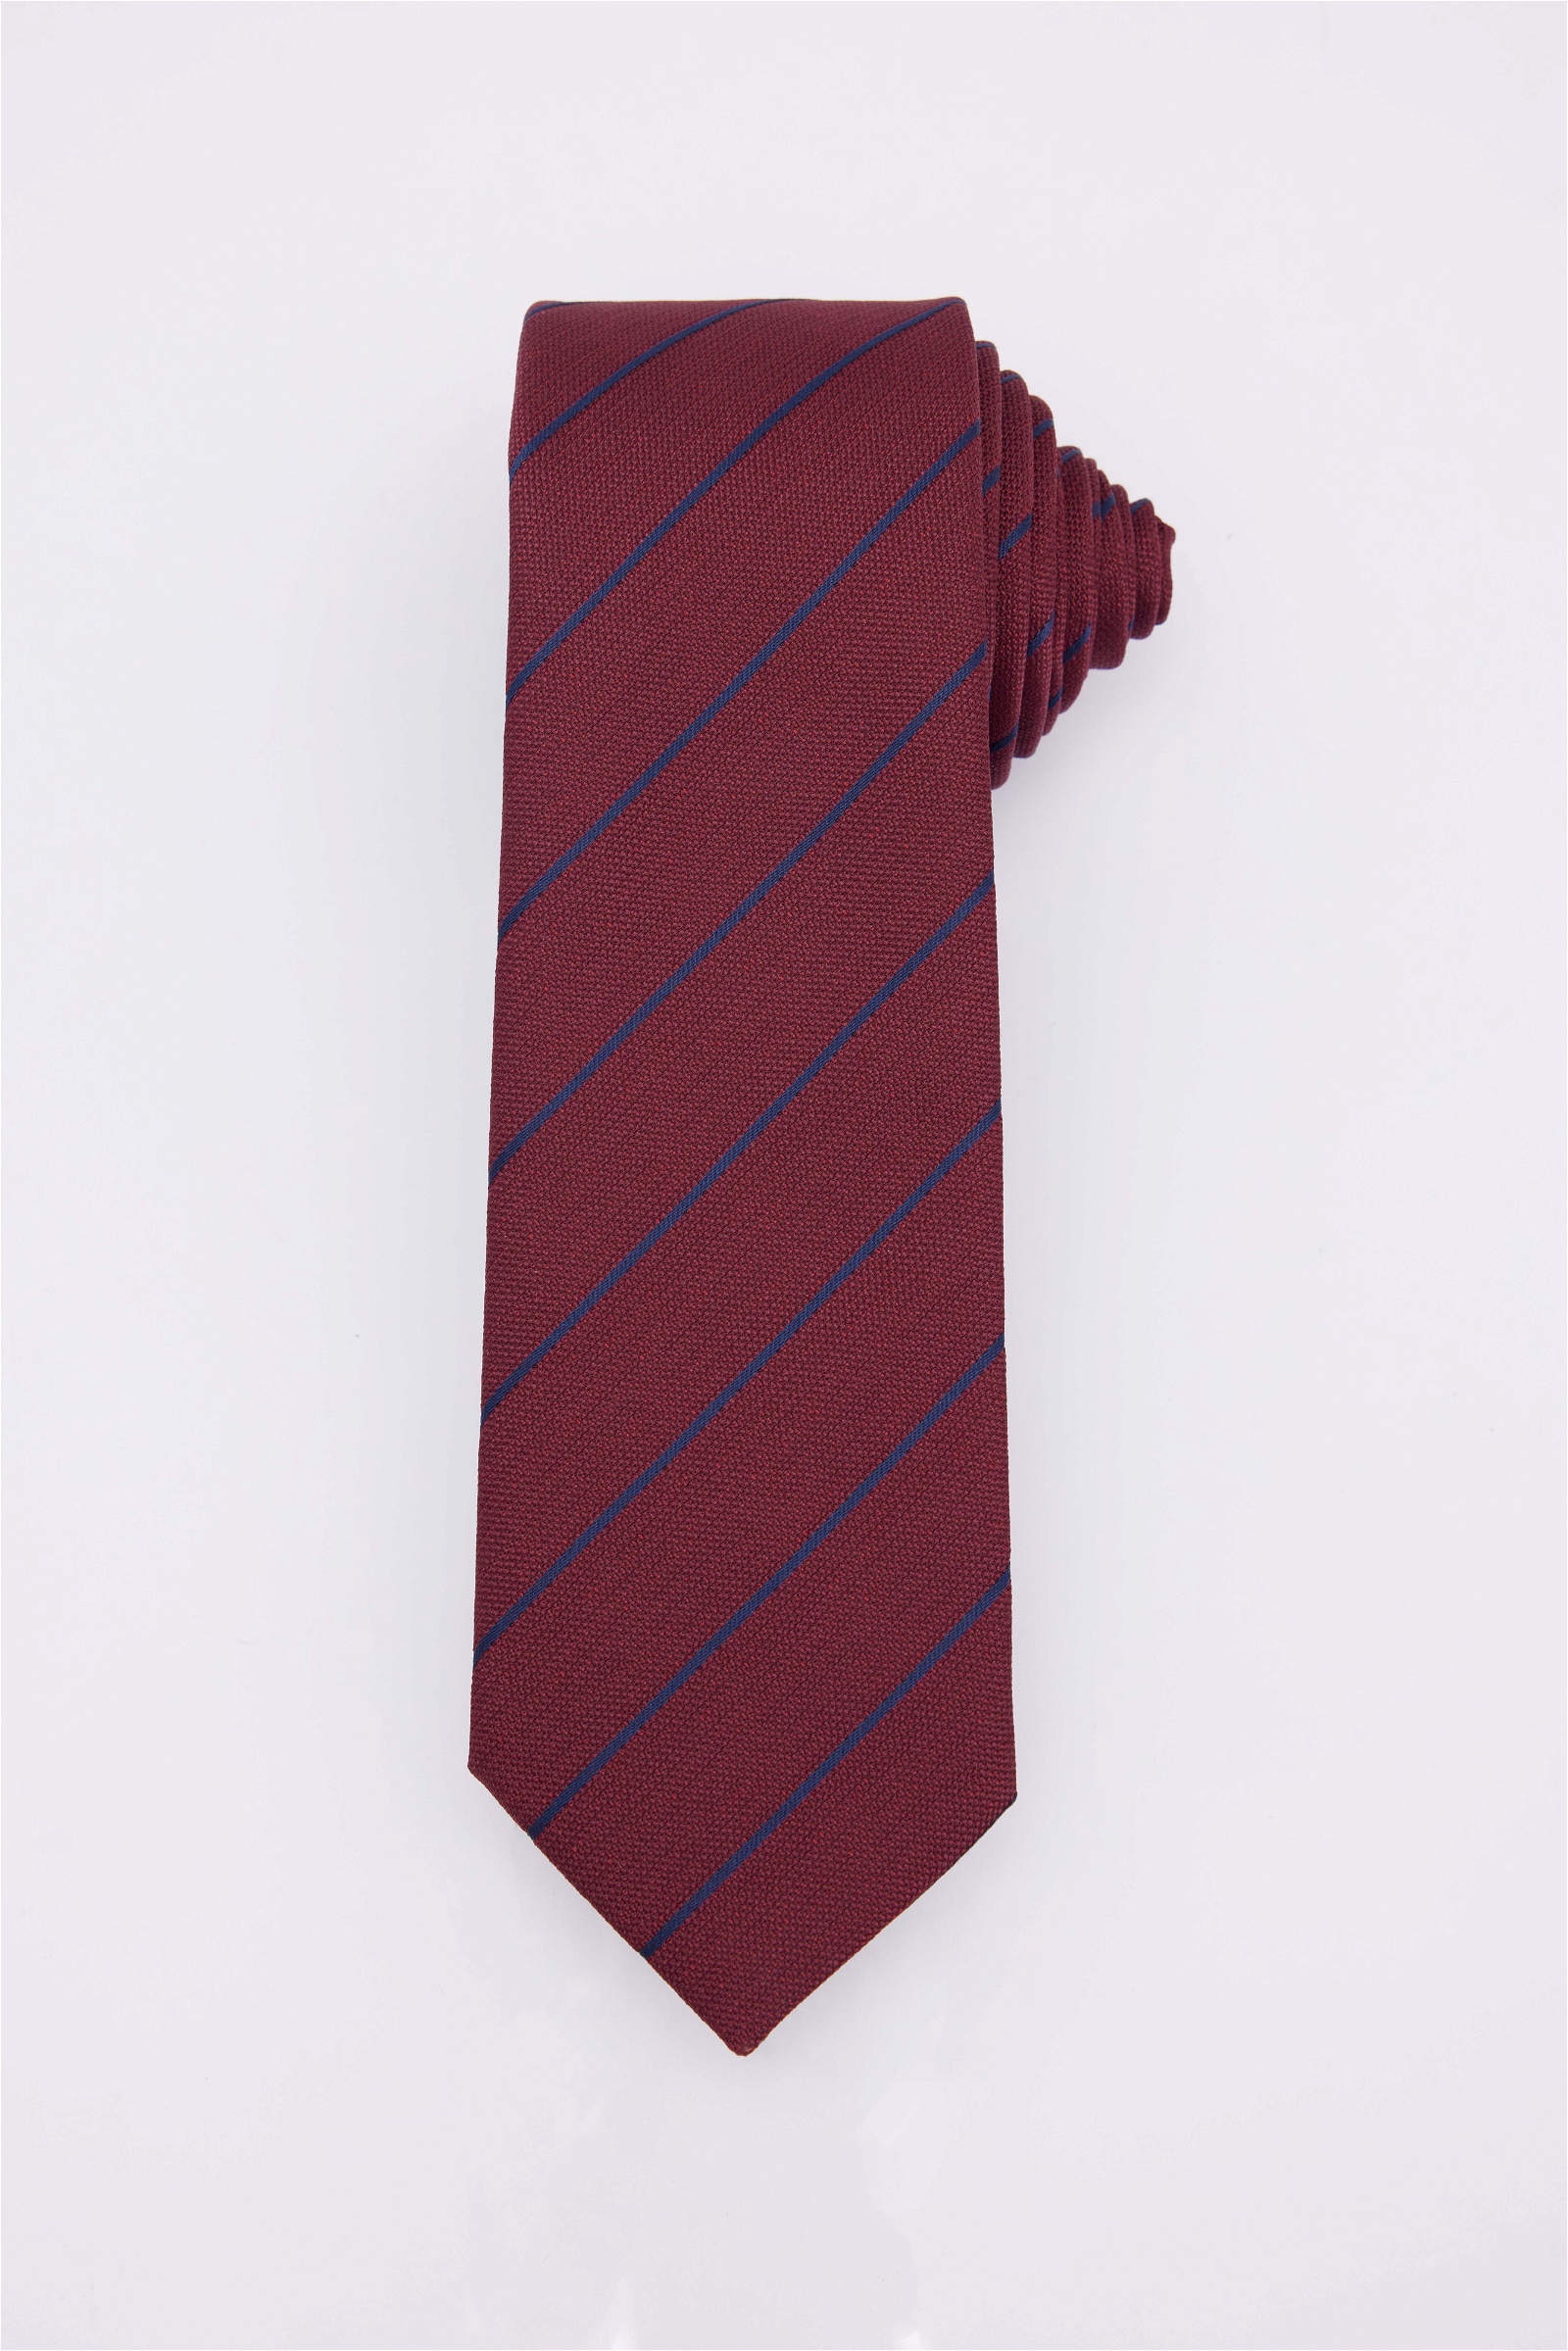  bordo Krawat